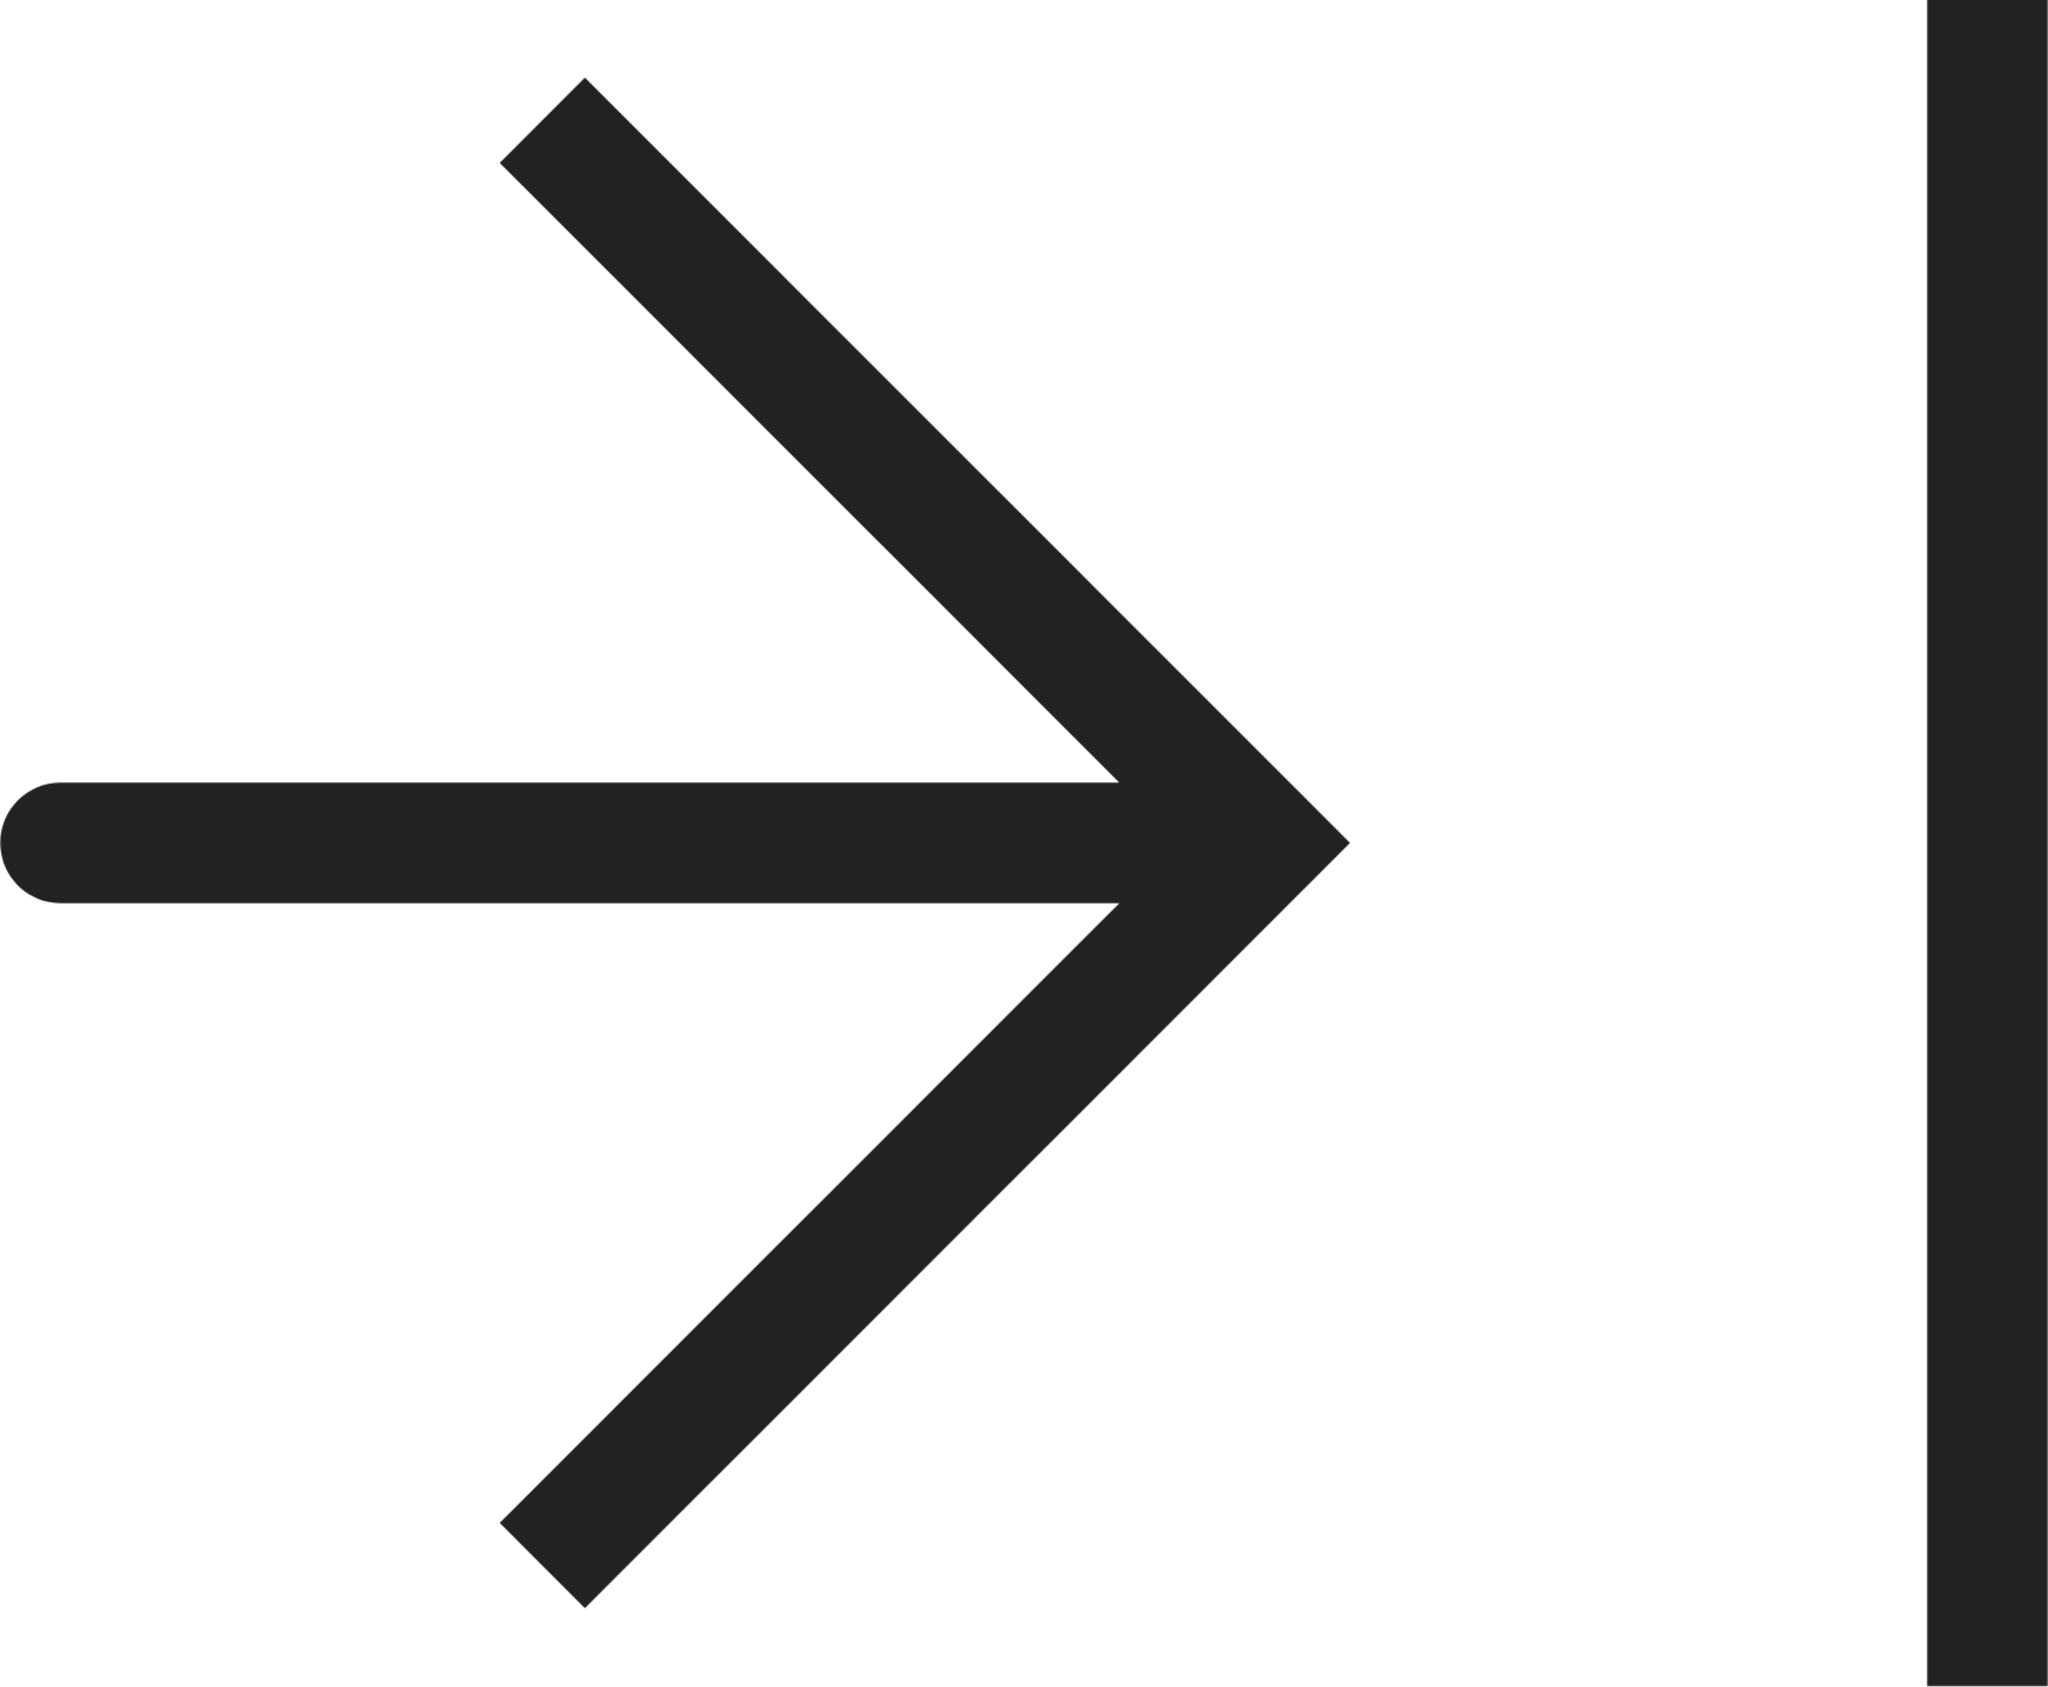 Arrow right stop light icon